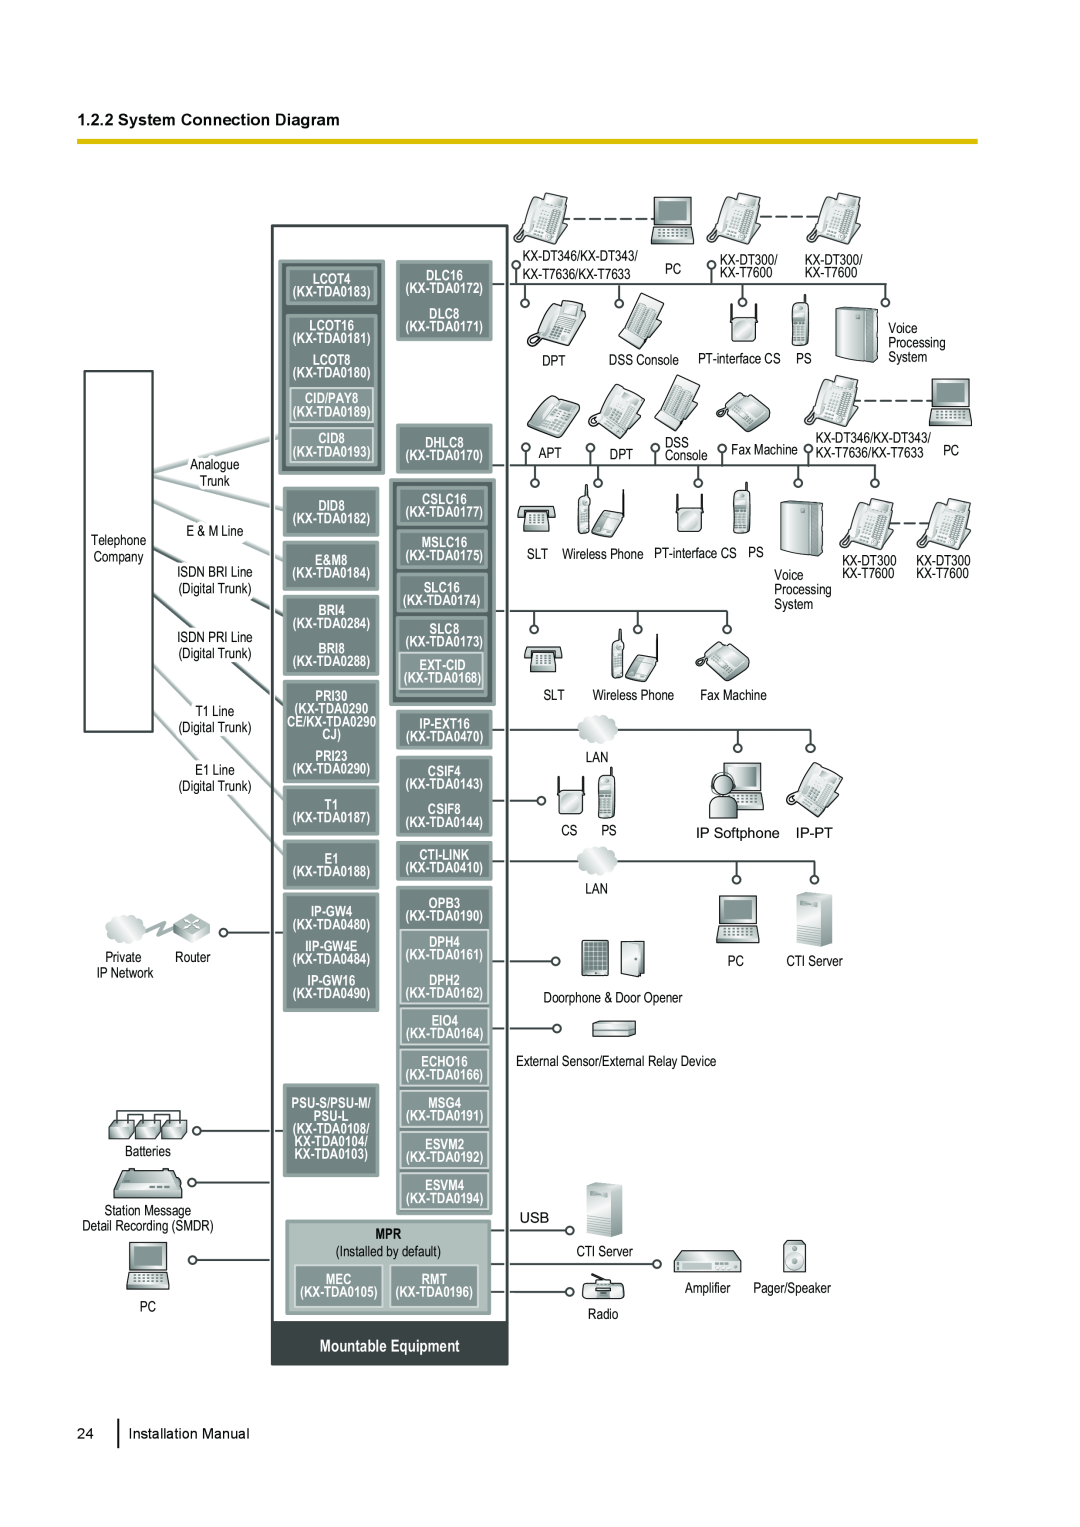 Panasonic KX-TDA100 installation manual System Connection Diagram, Mountable Equipment 